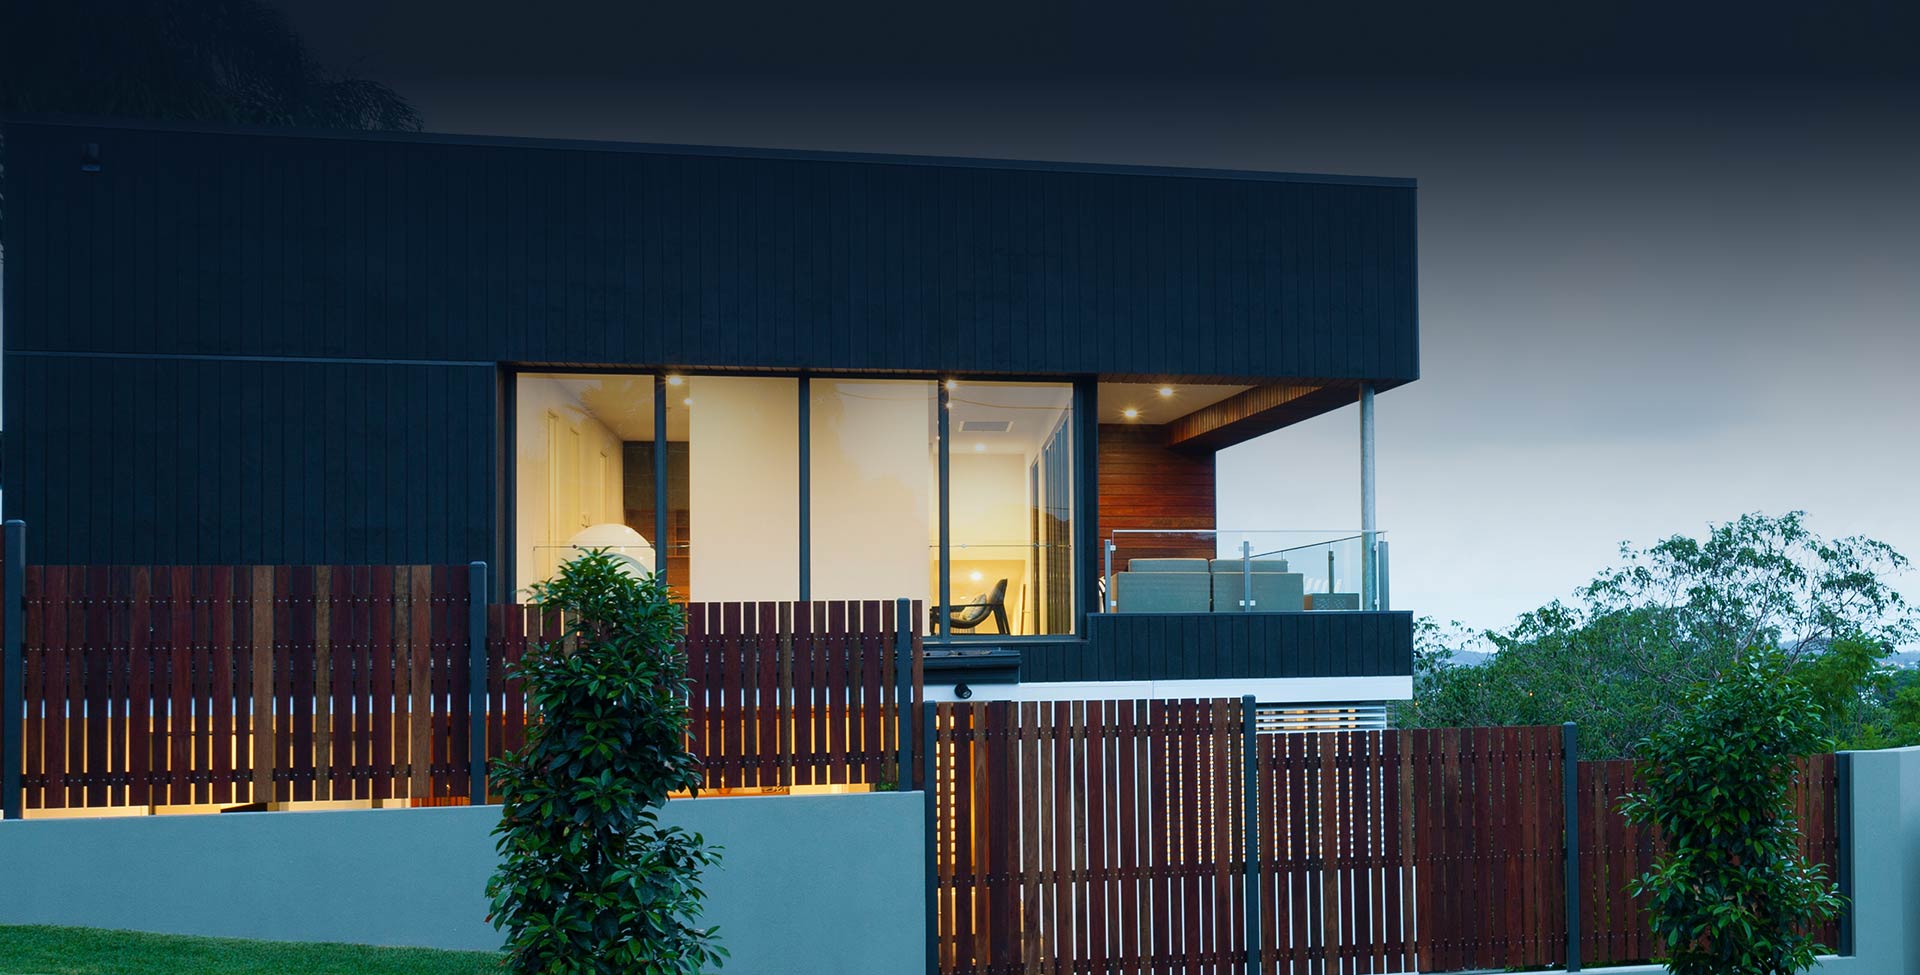 New stylish modern home exterior at dusk